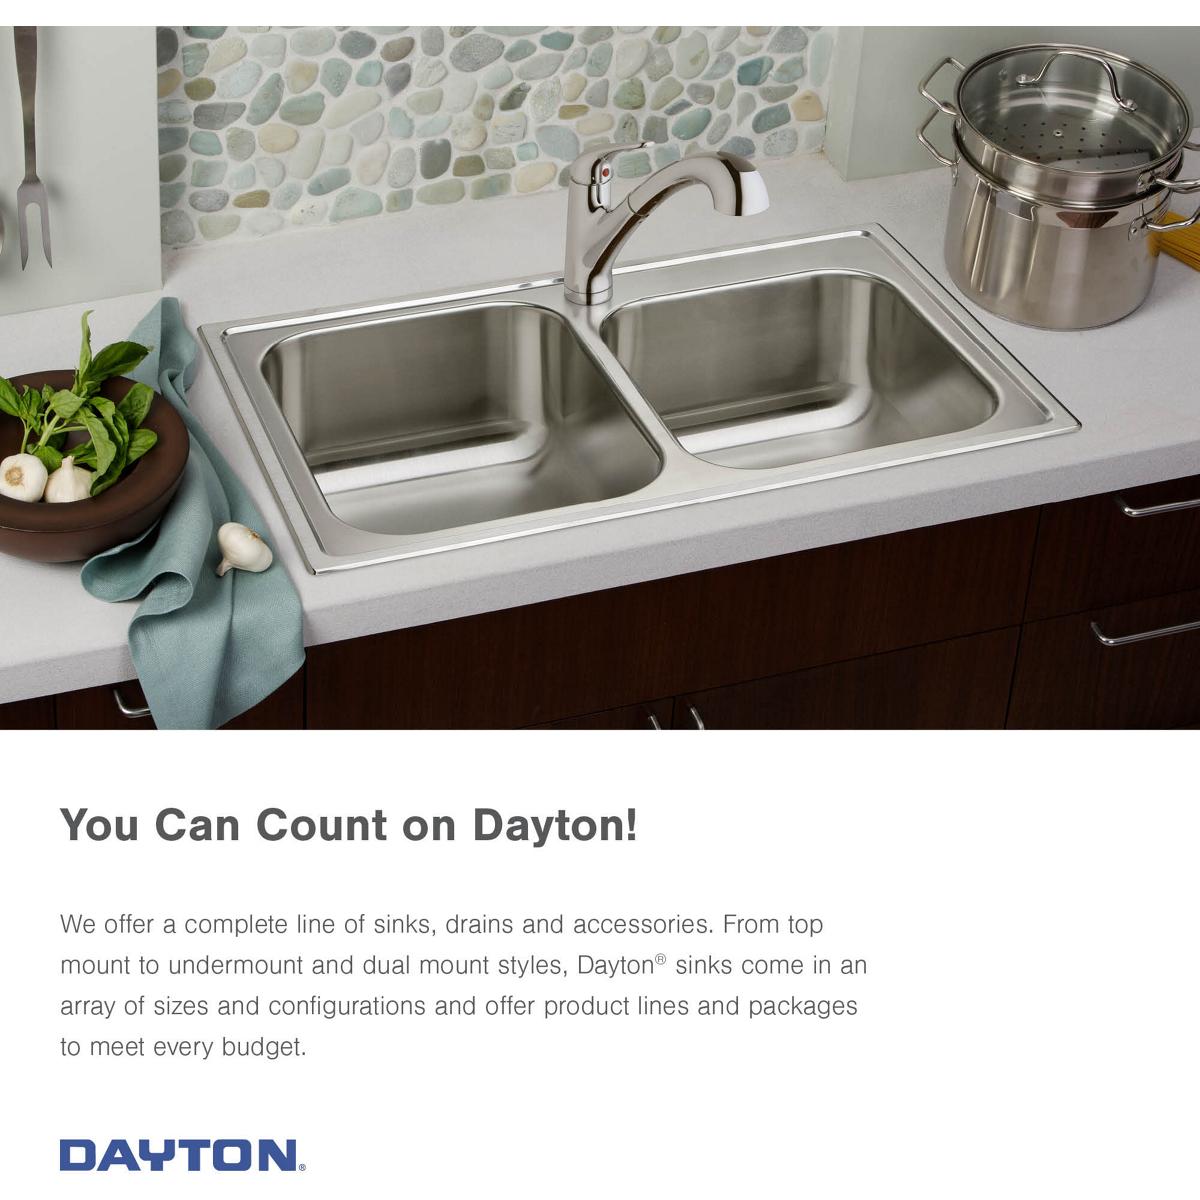 Elkay Dayton Stainless Steel 15" x 15" x 6" Single Bowl Drop-in Bar Sink and Faucet Kit